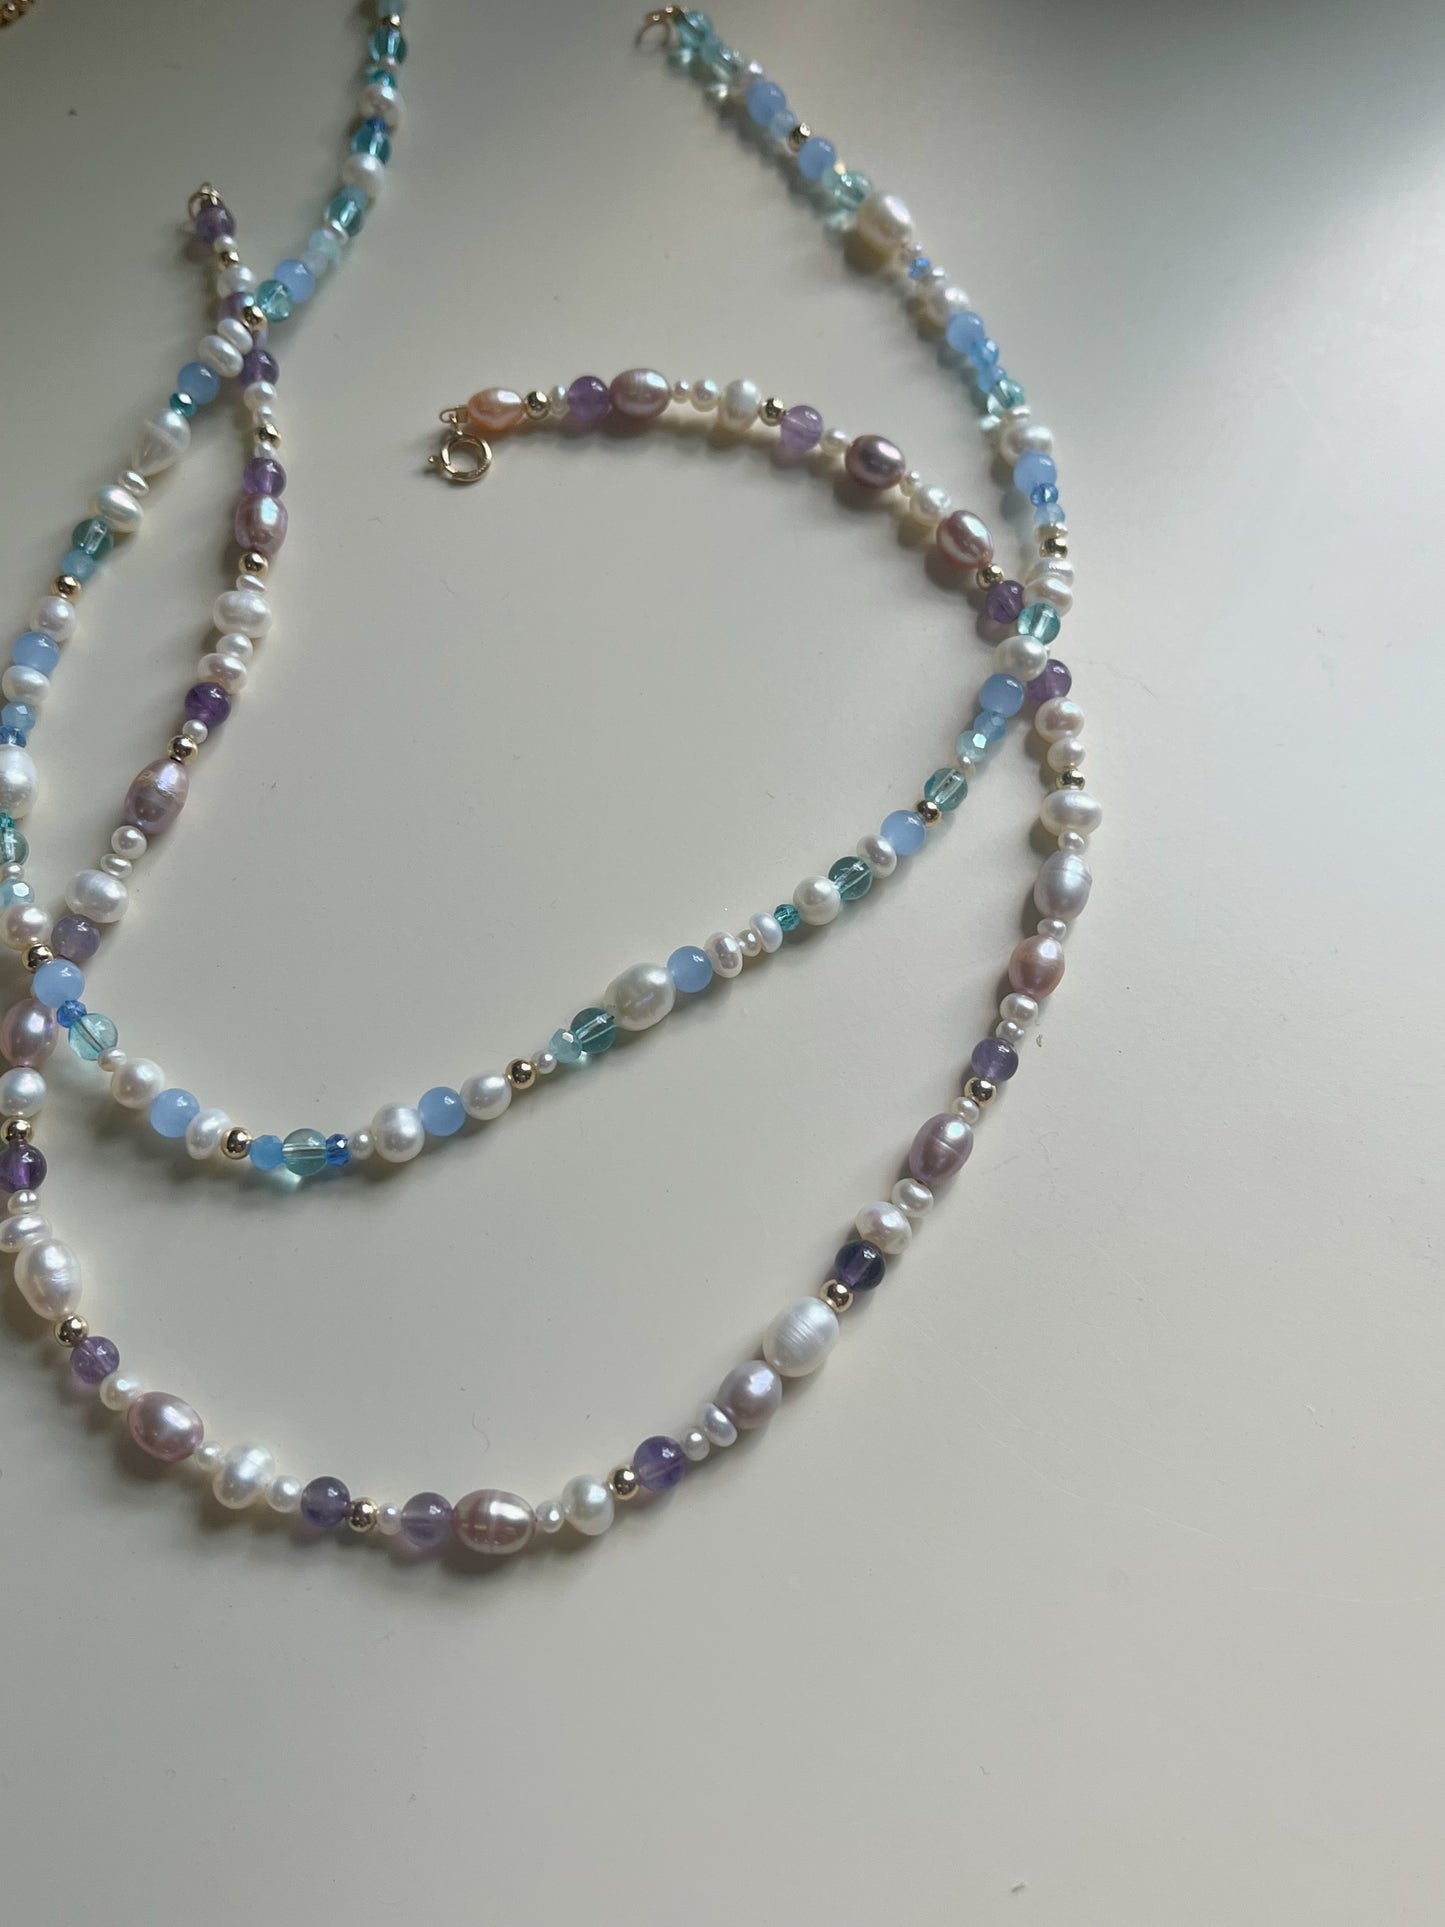 Unique beaded necklace